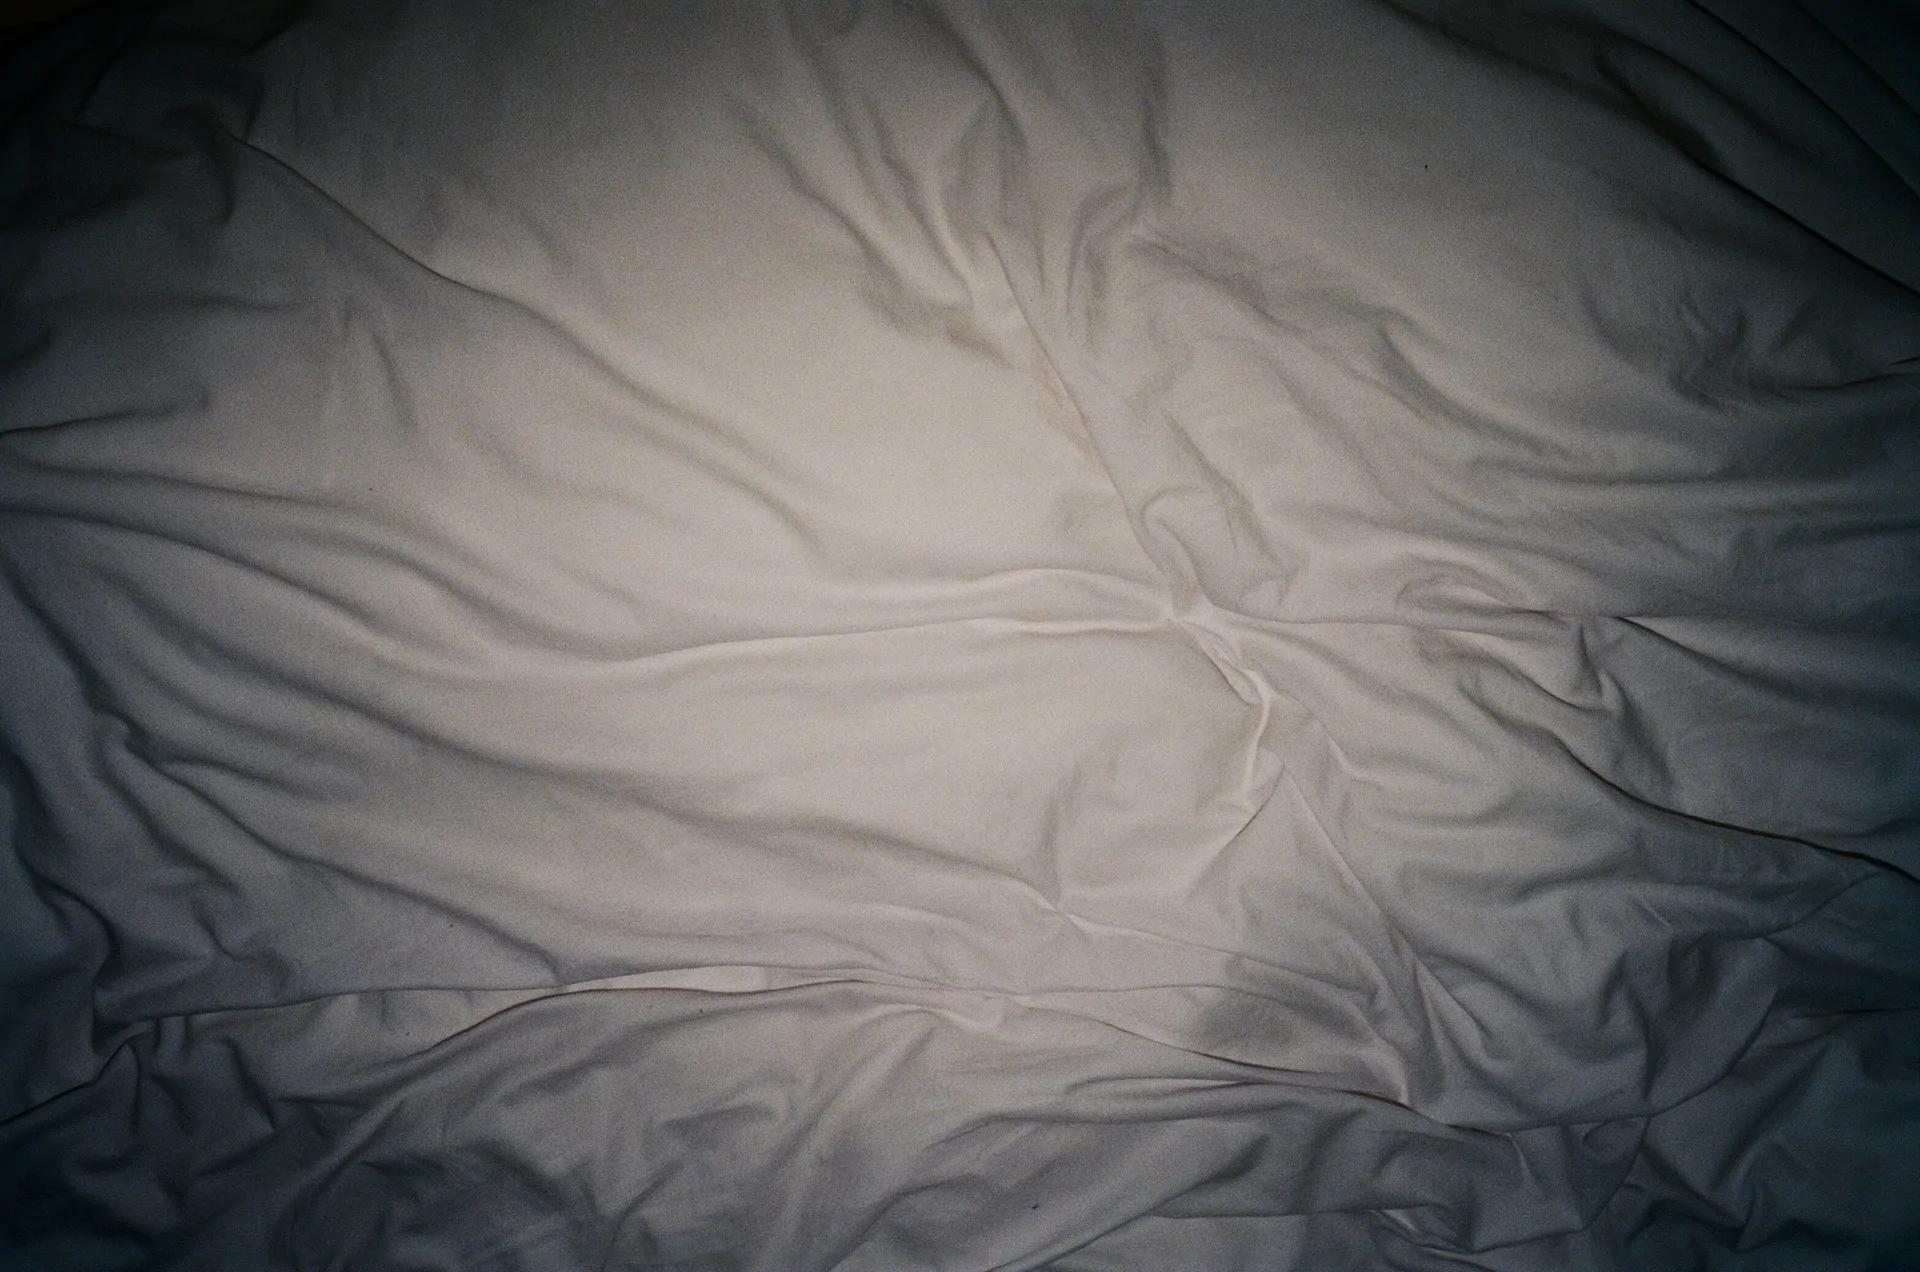 White sheets